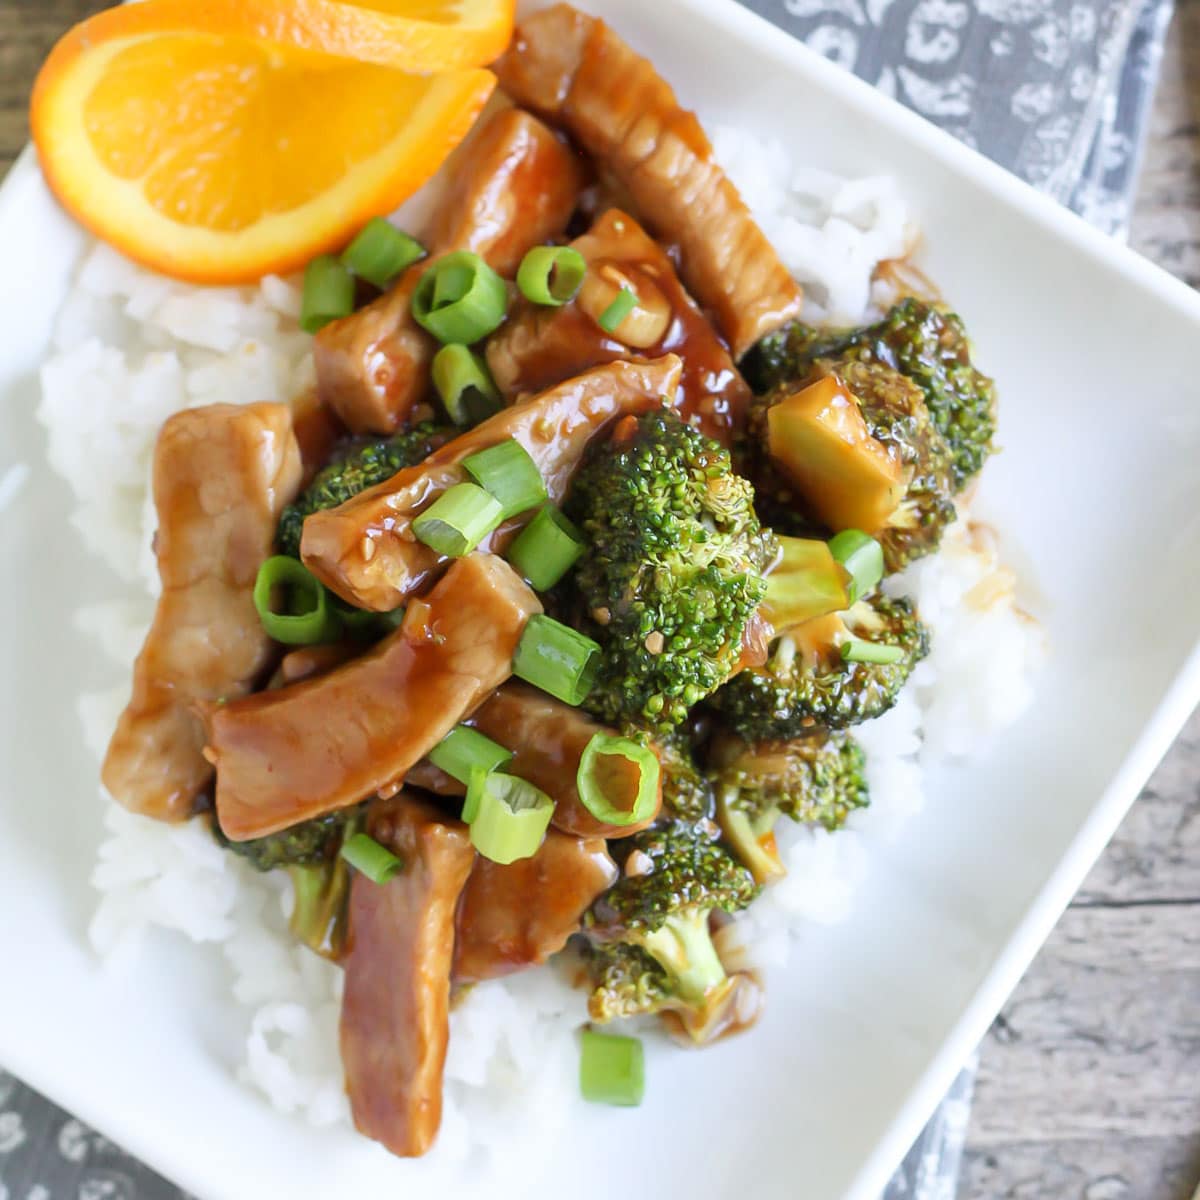 Quick dinner ideas - pork and broccoli stir fry served on rice.